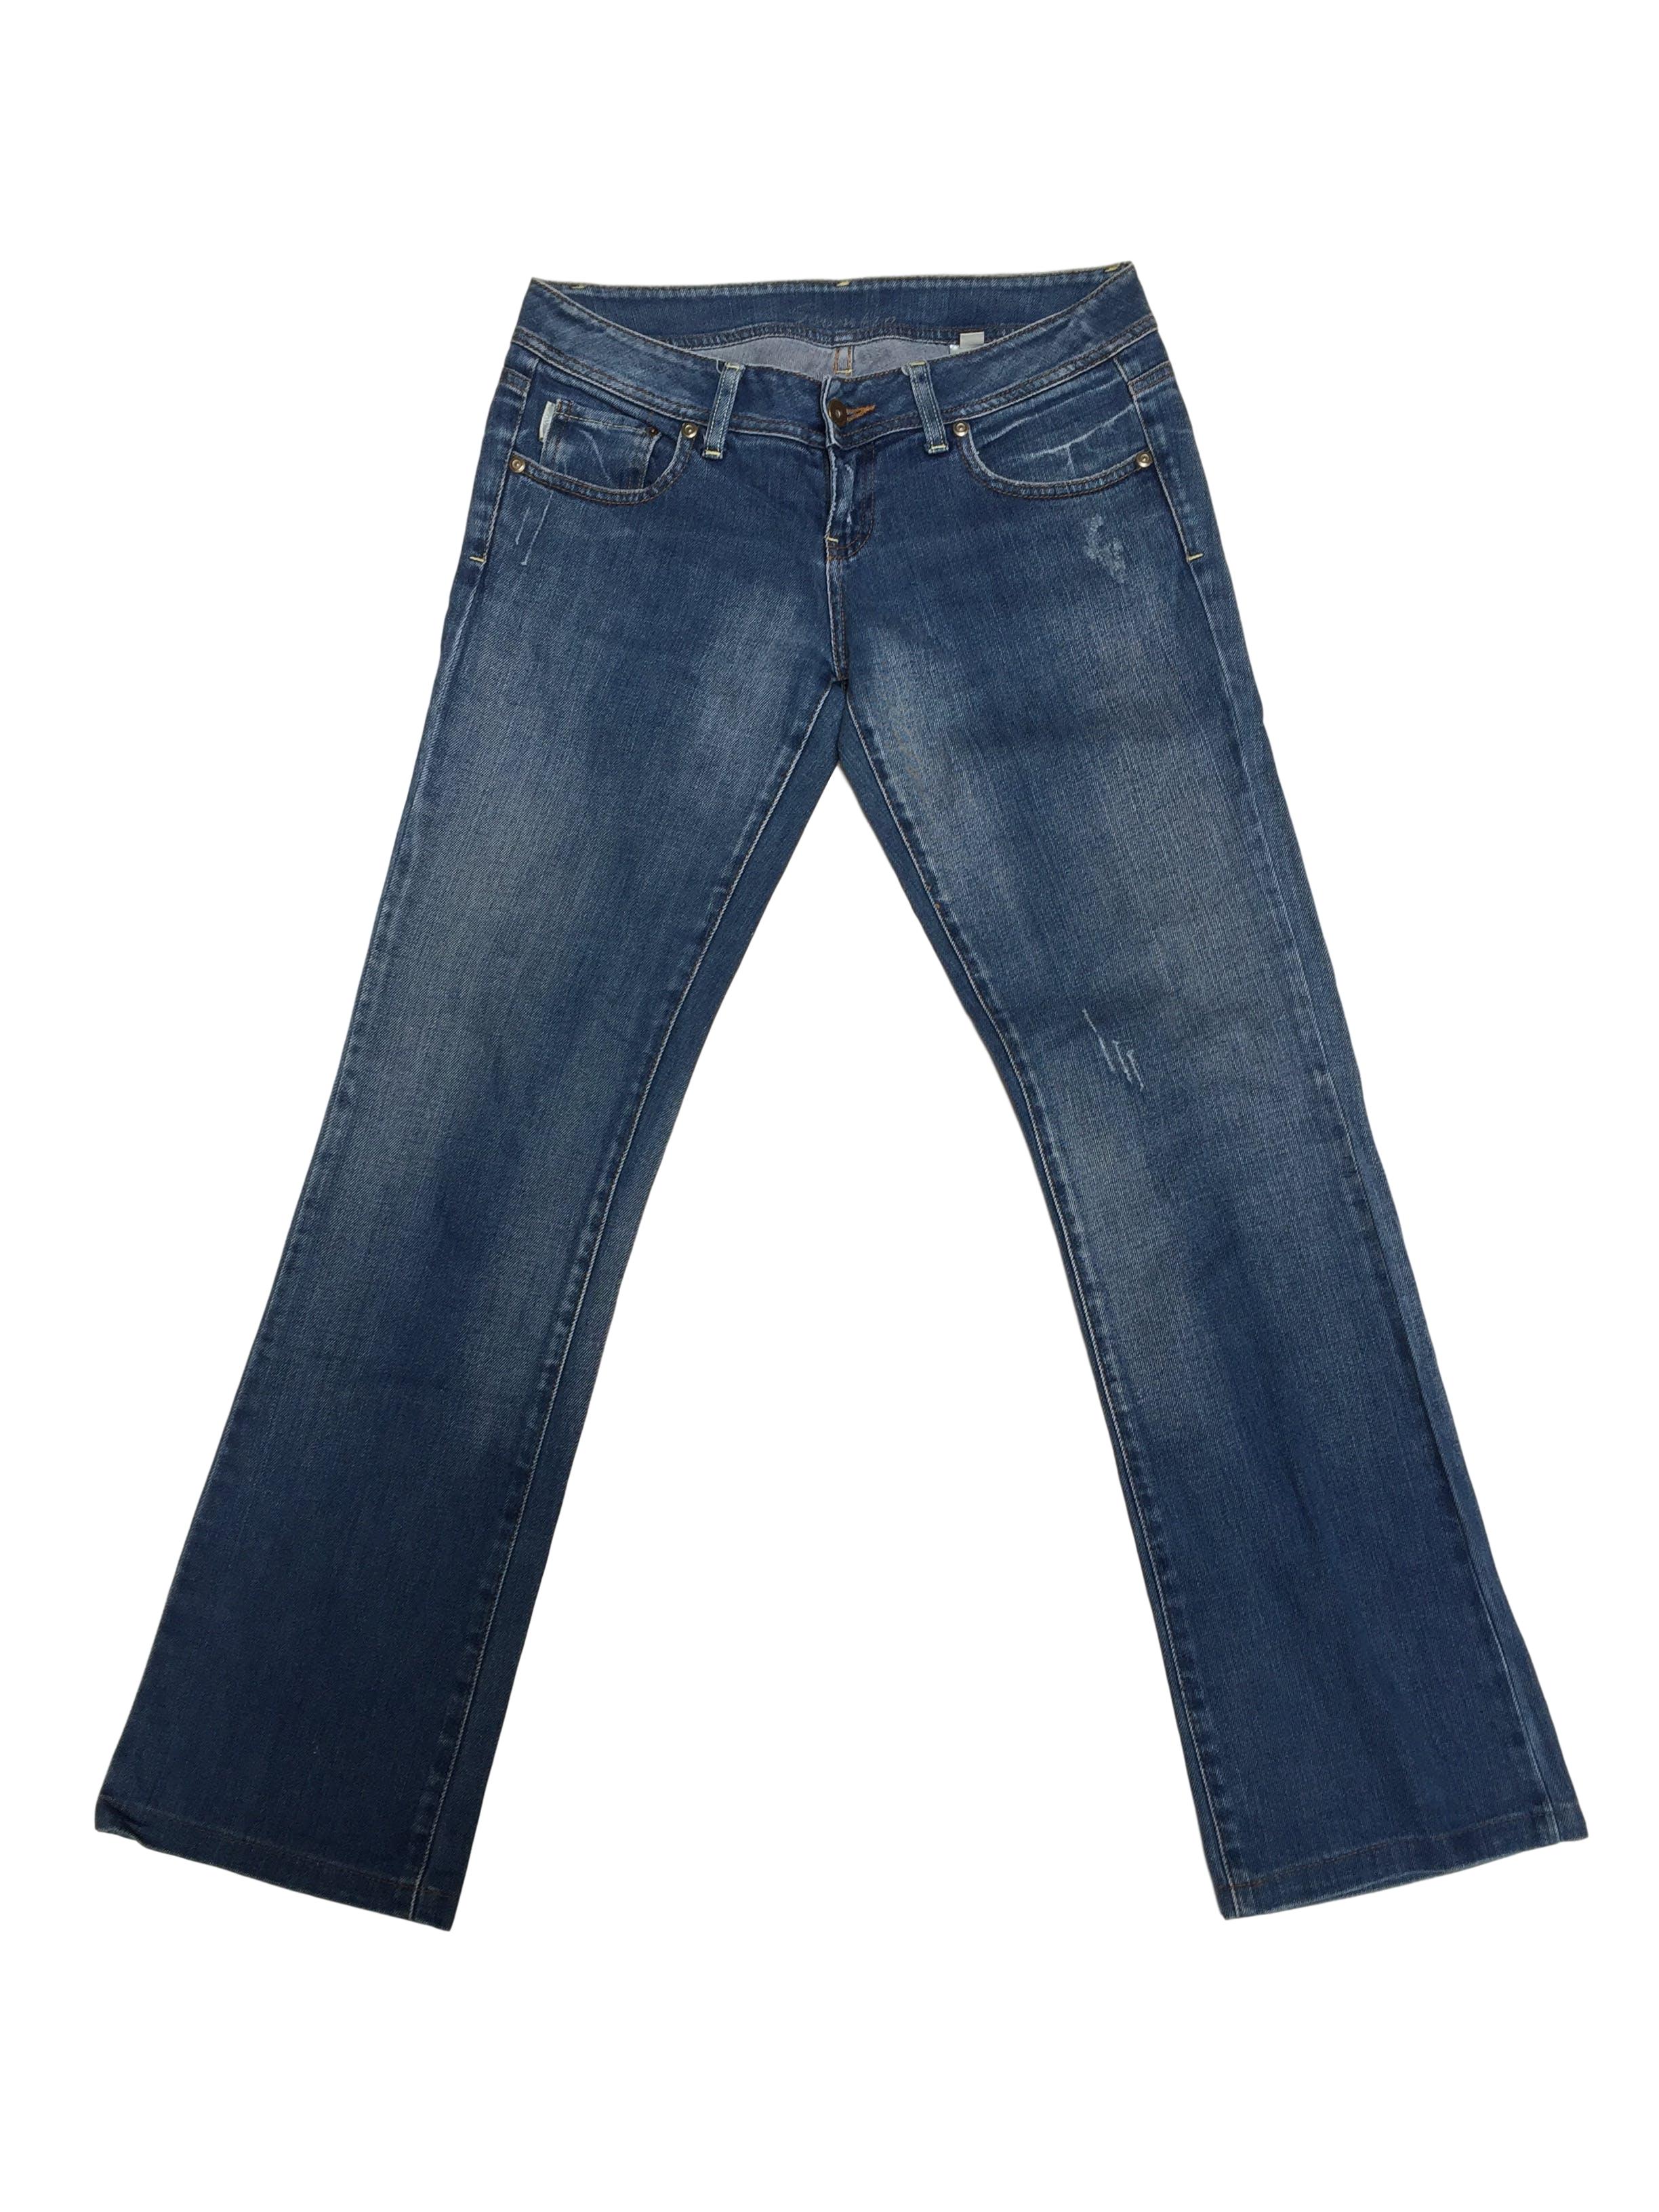 Pantalón Scombro jean celeste con focalizado, semi cadera, 97% algodón, bolsillos laterales y posteriores, corte recto. Pretina 78cm
Talla 29